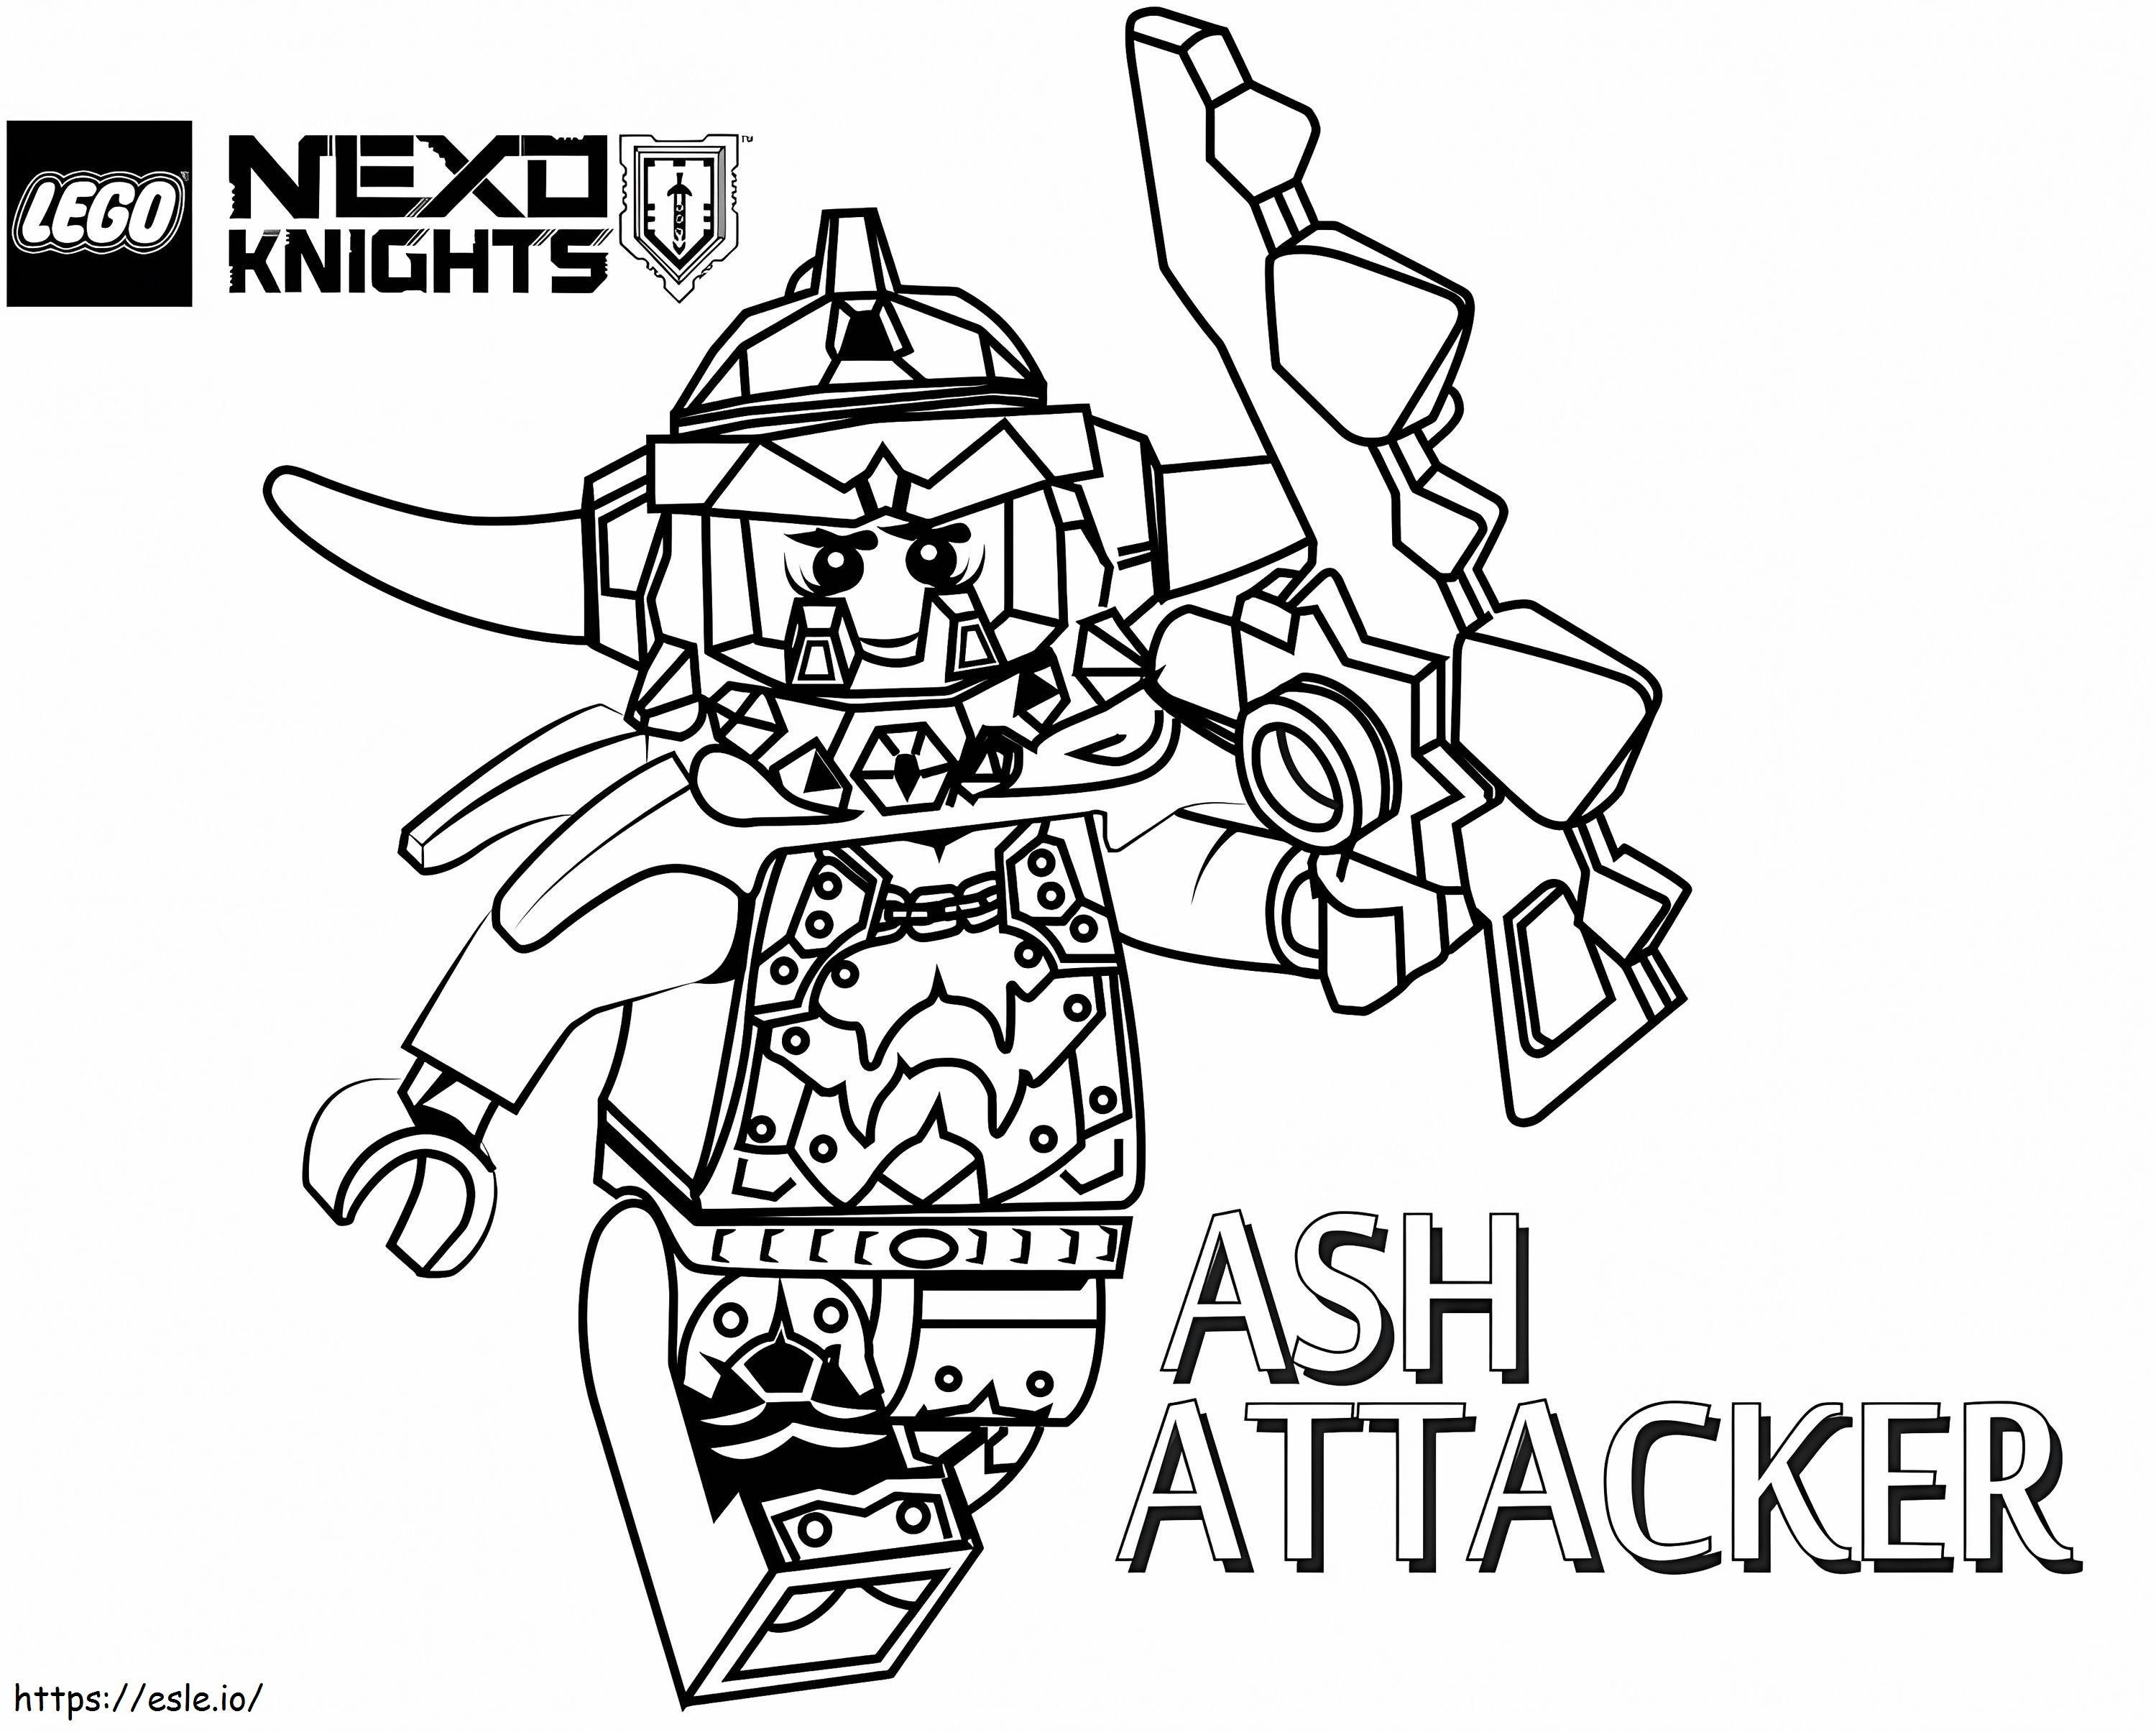 1593220199 Ash Attacker coloring page